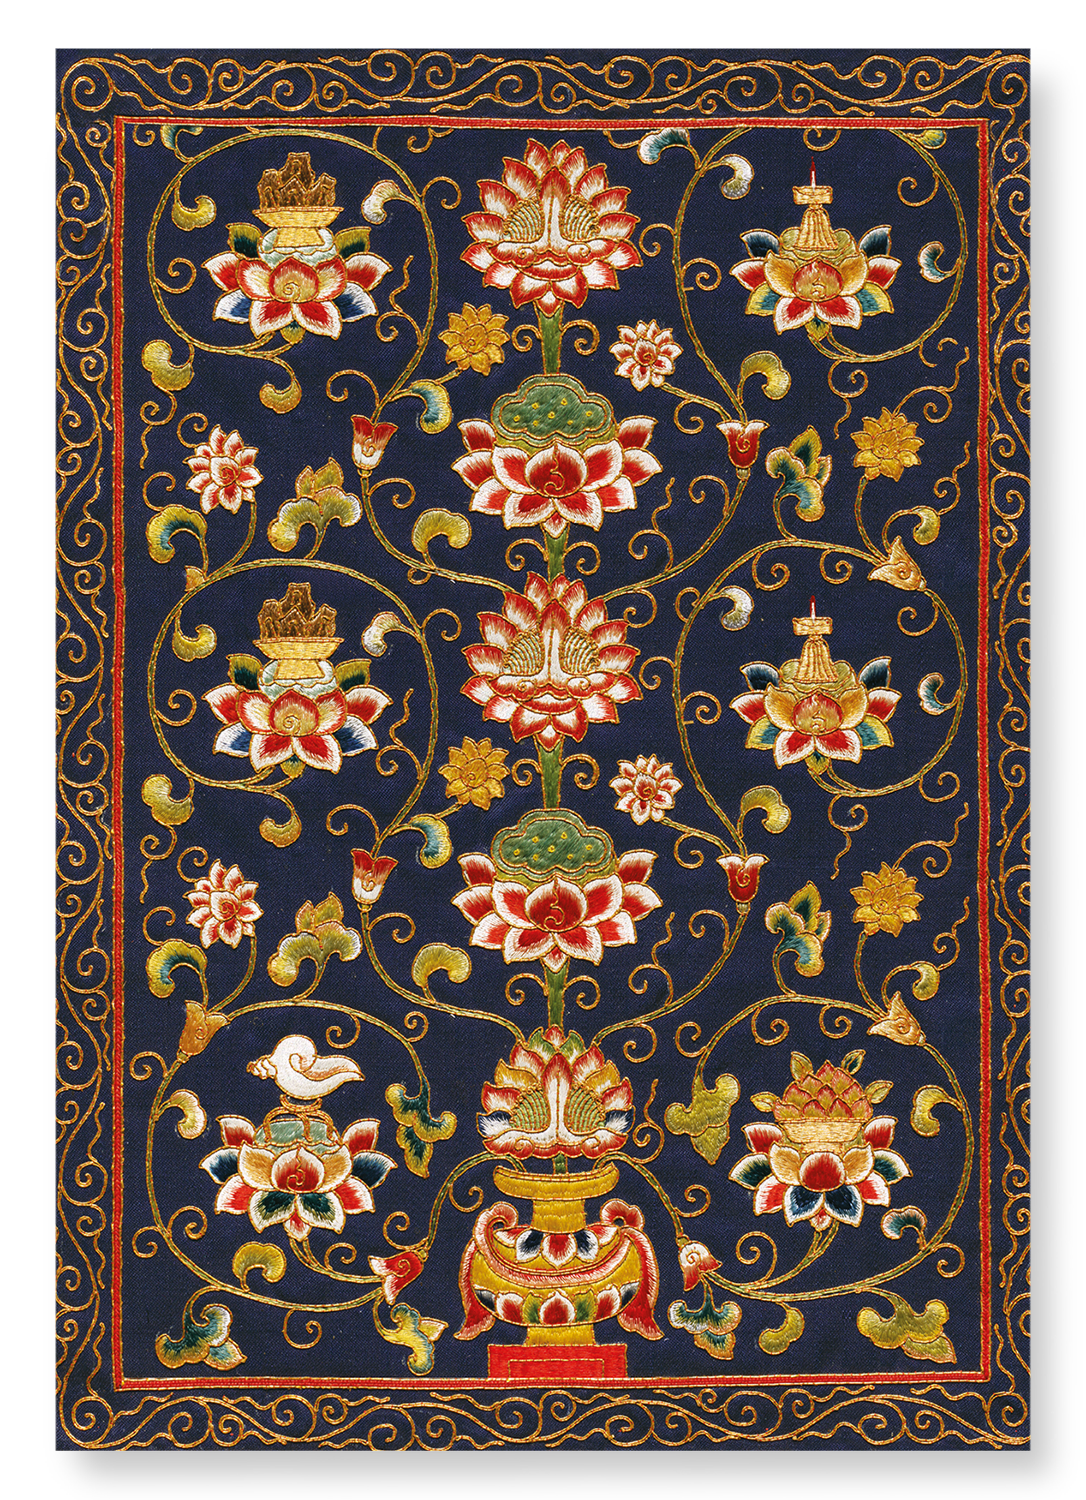 LOTUS FLOWER EMBROIDERY (14TH C): Pattern Art Print